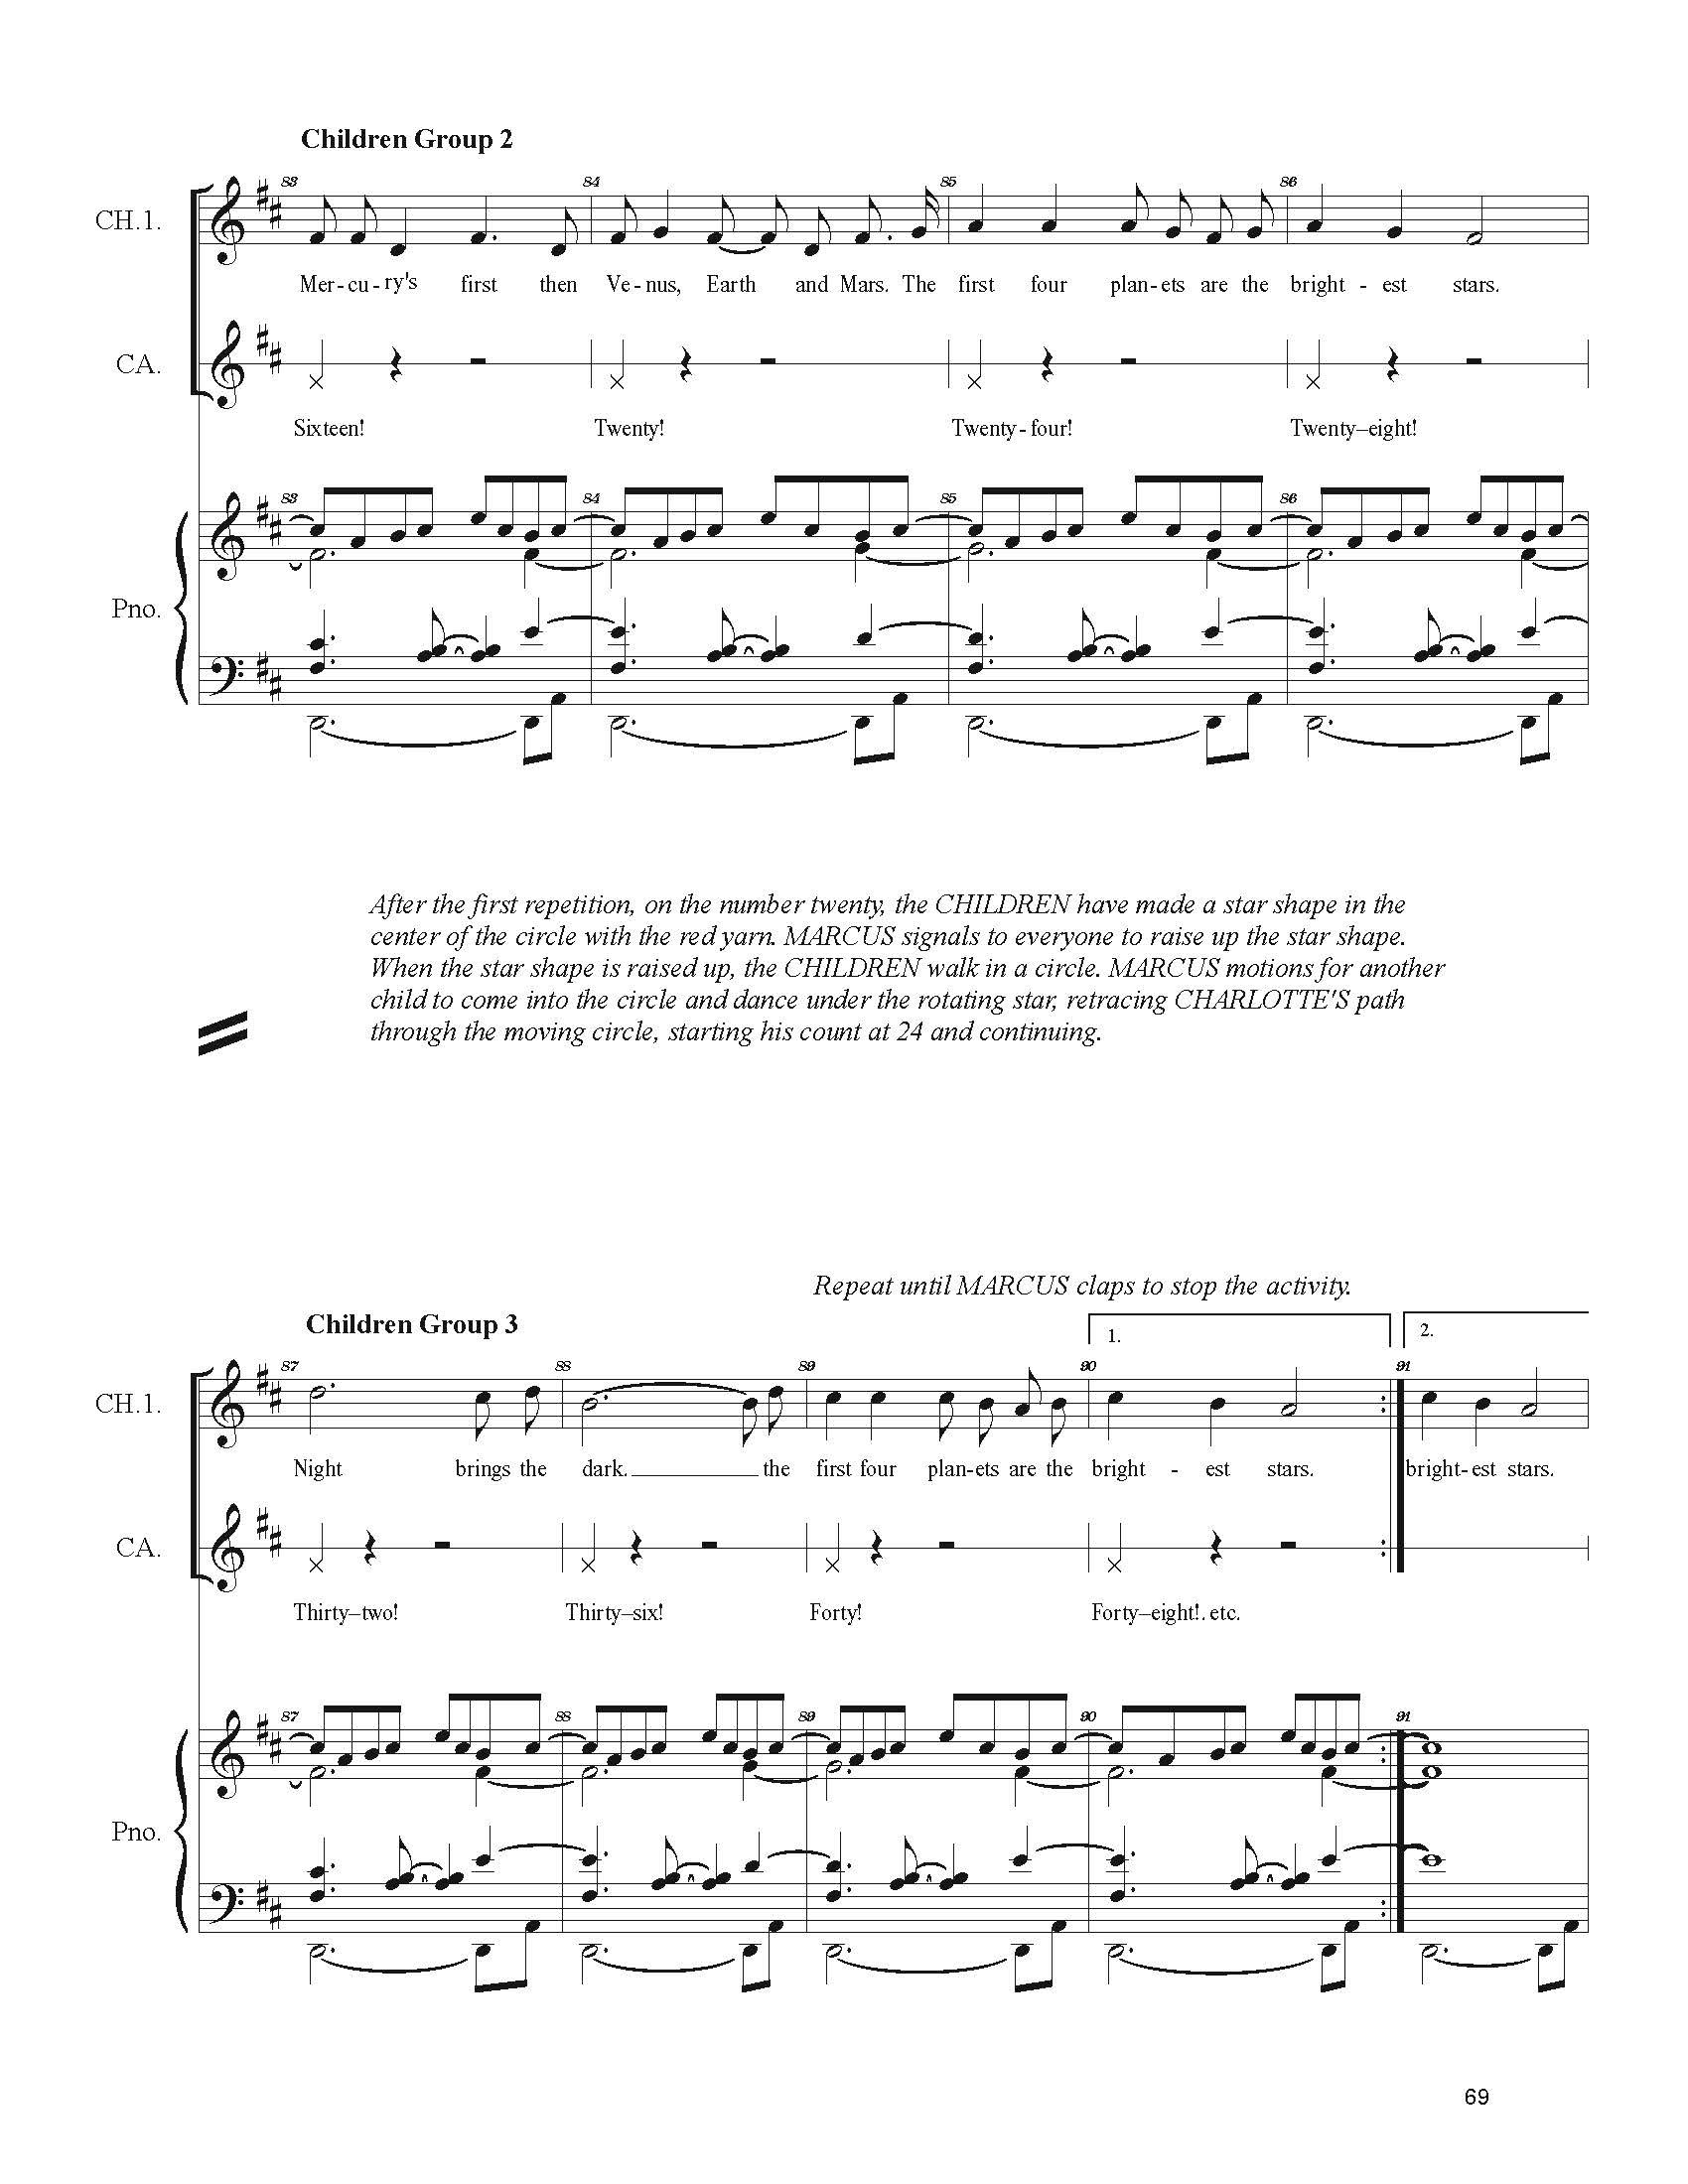 FULL PIANO VOCAL SCORE DRAFT 1 - Score_Page_069.jpg